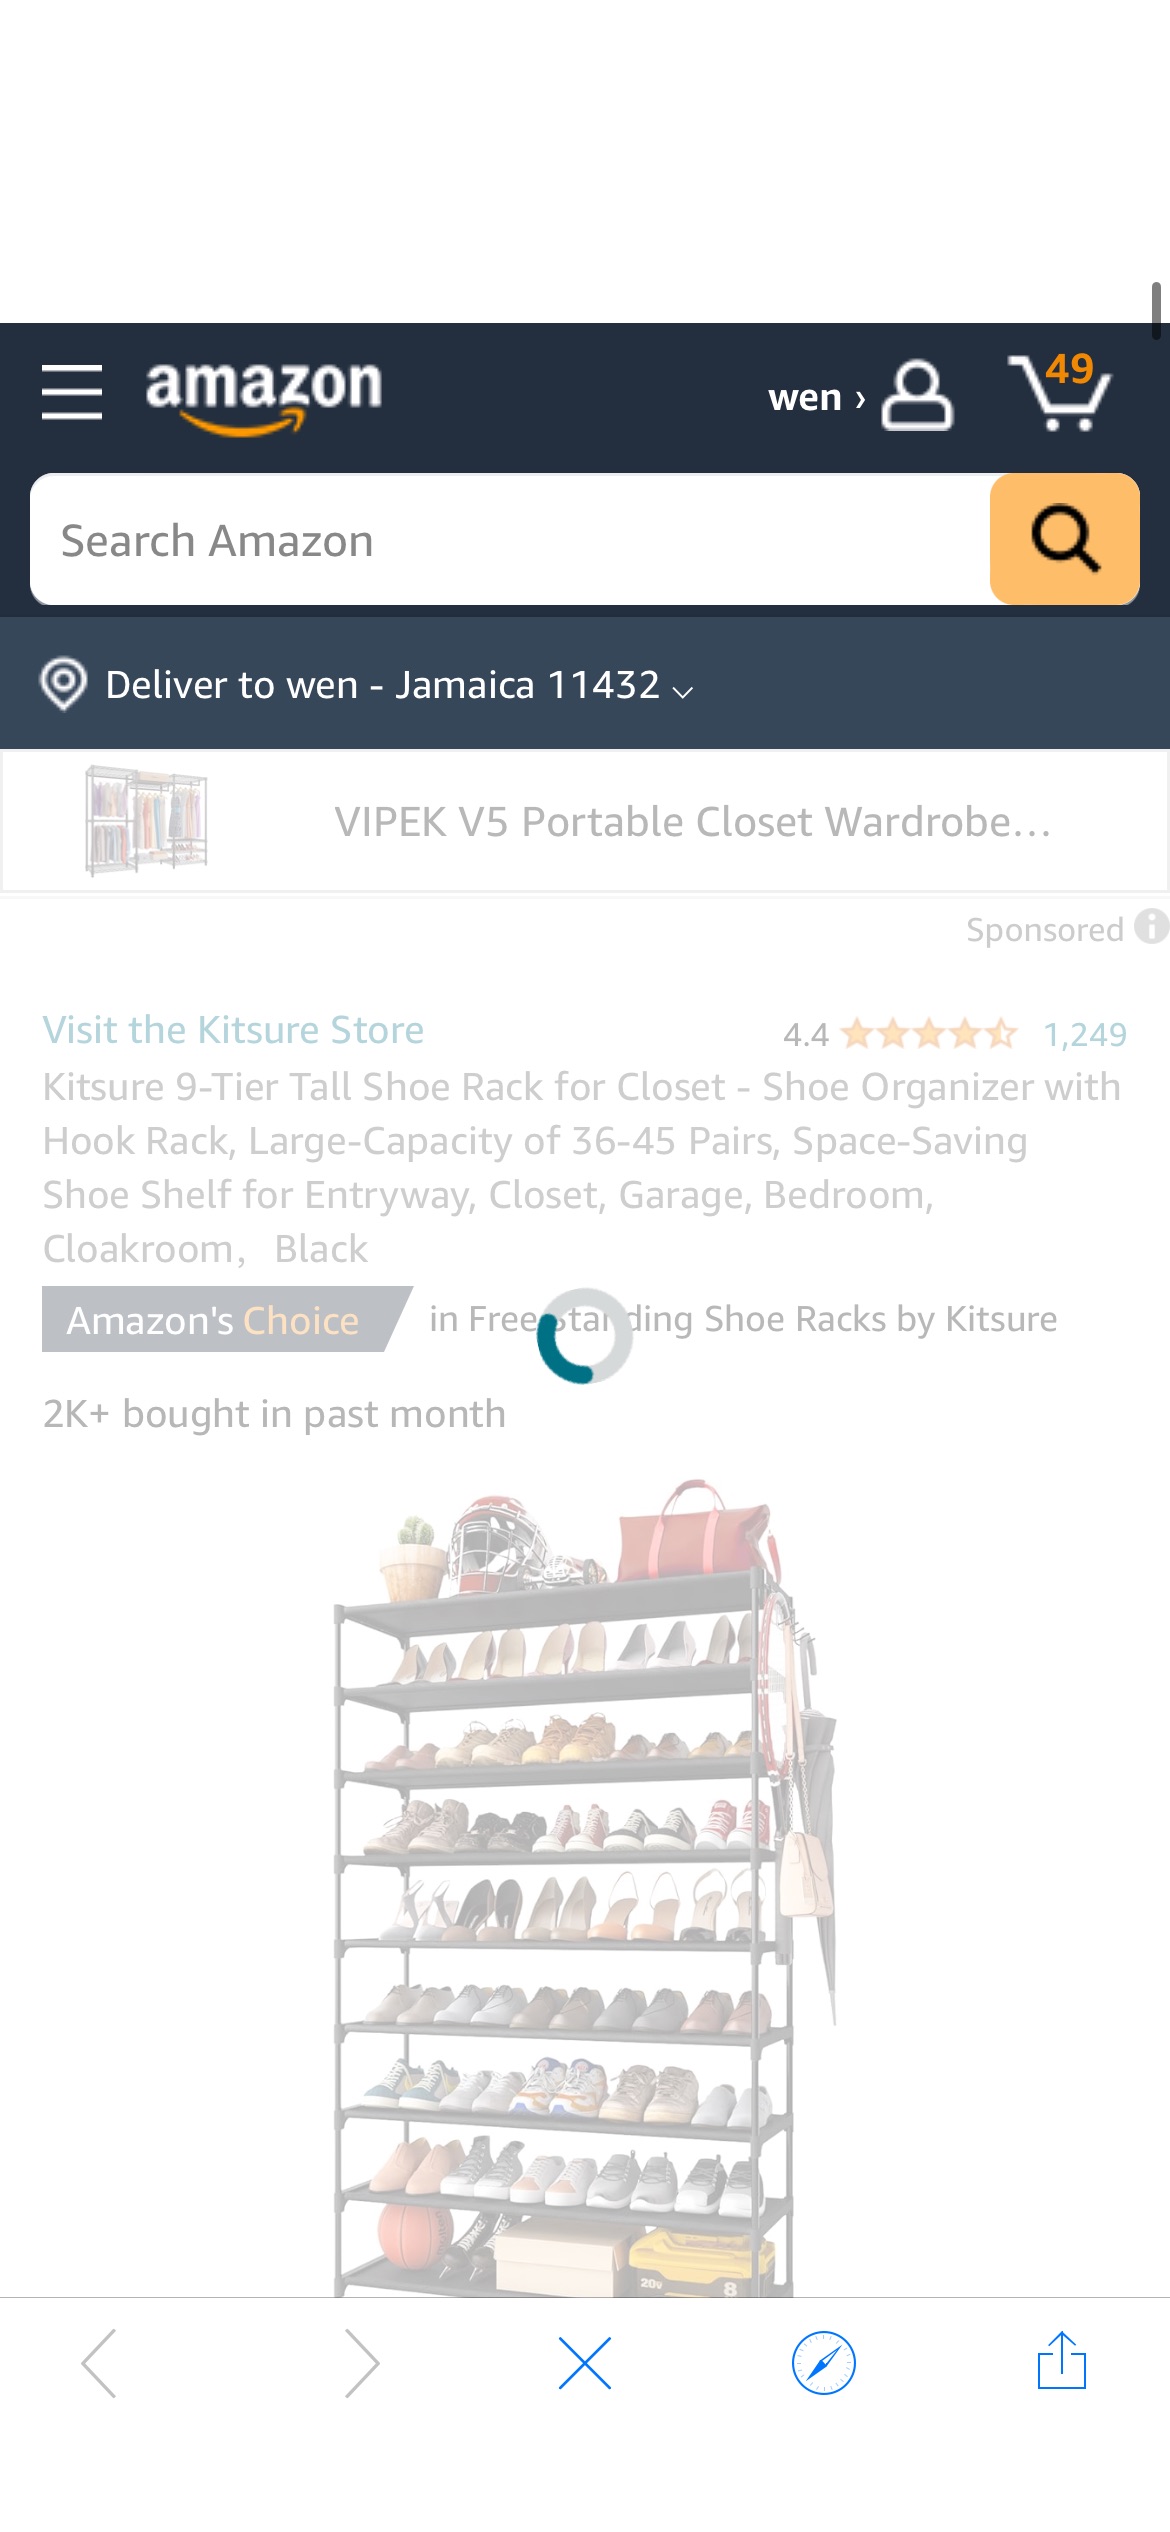 Amazon.com: Kitsure 9-Tier Tall Shoe Rack for Closet - Shoe Organizer with Hook Rack, Large-Capacity of 36-45 Pairs, Space-Saving Shoe Shelf for Entryway, Closet, Garage, Bedroom, Cloakroom，Black : Ho